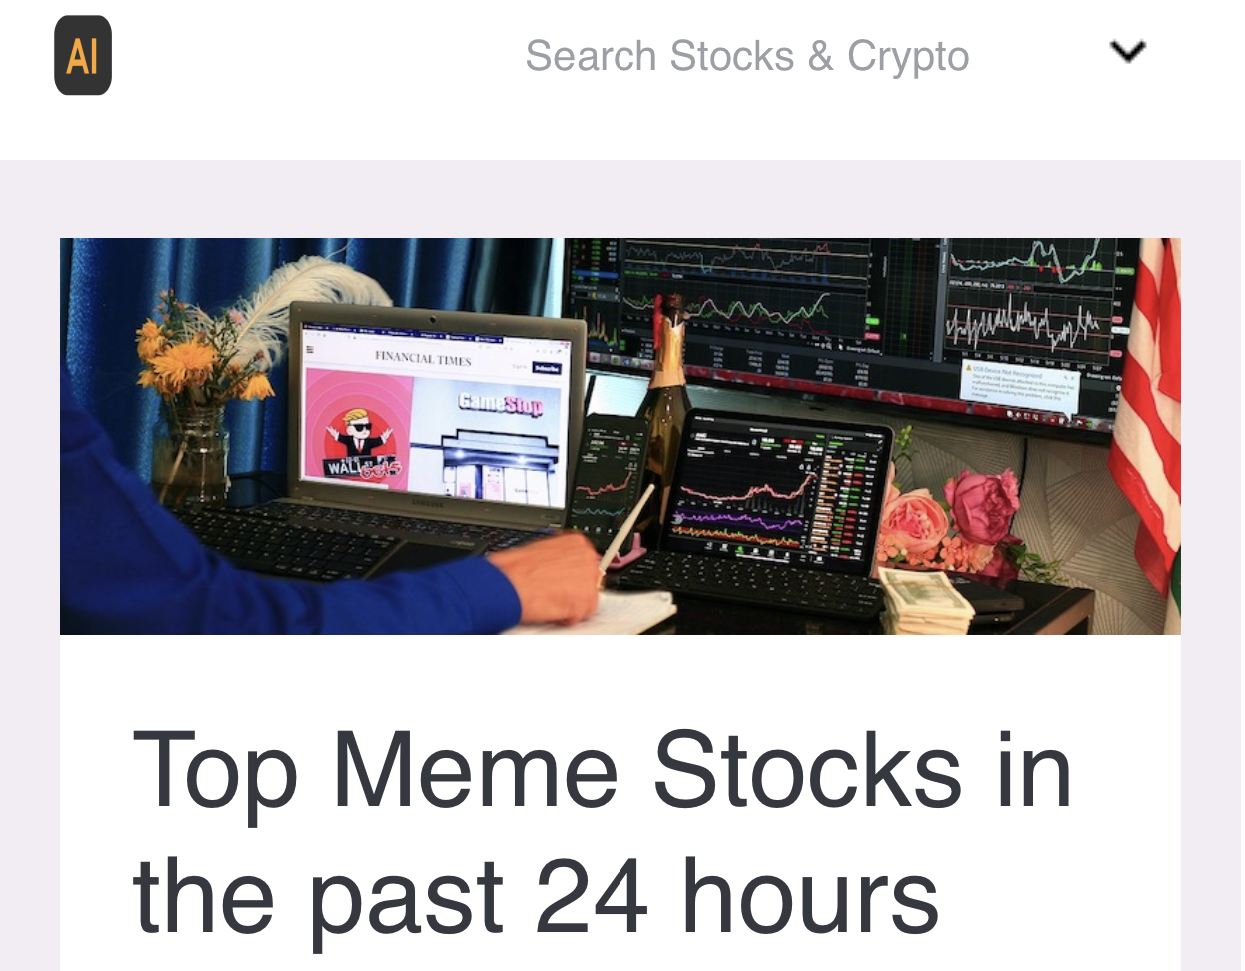 Top Meme Stocks on AltIndex